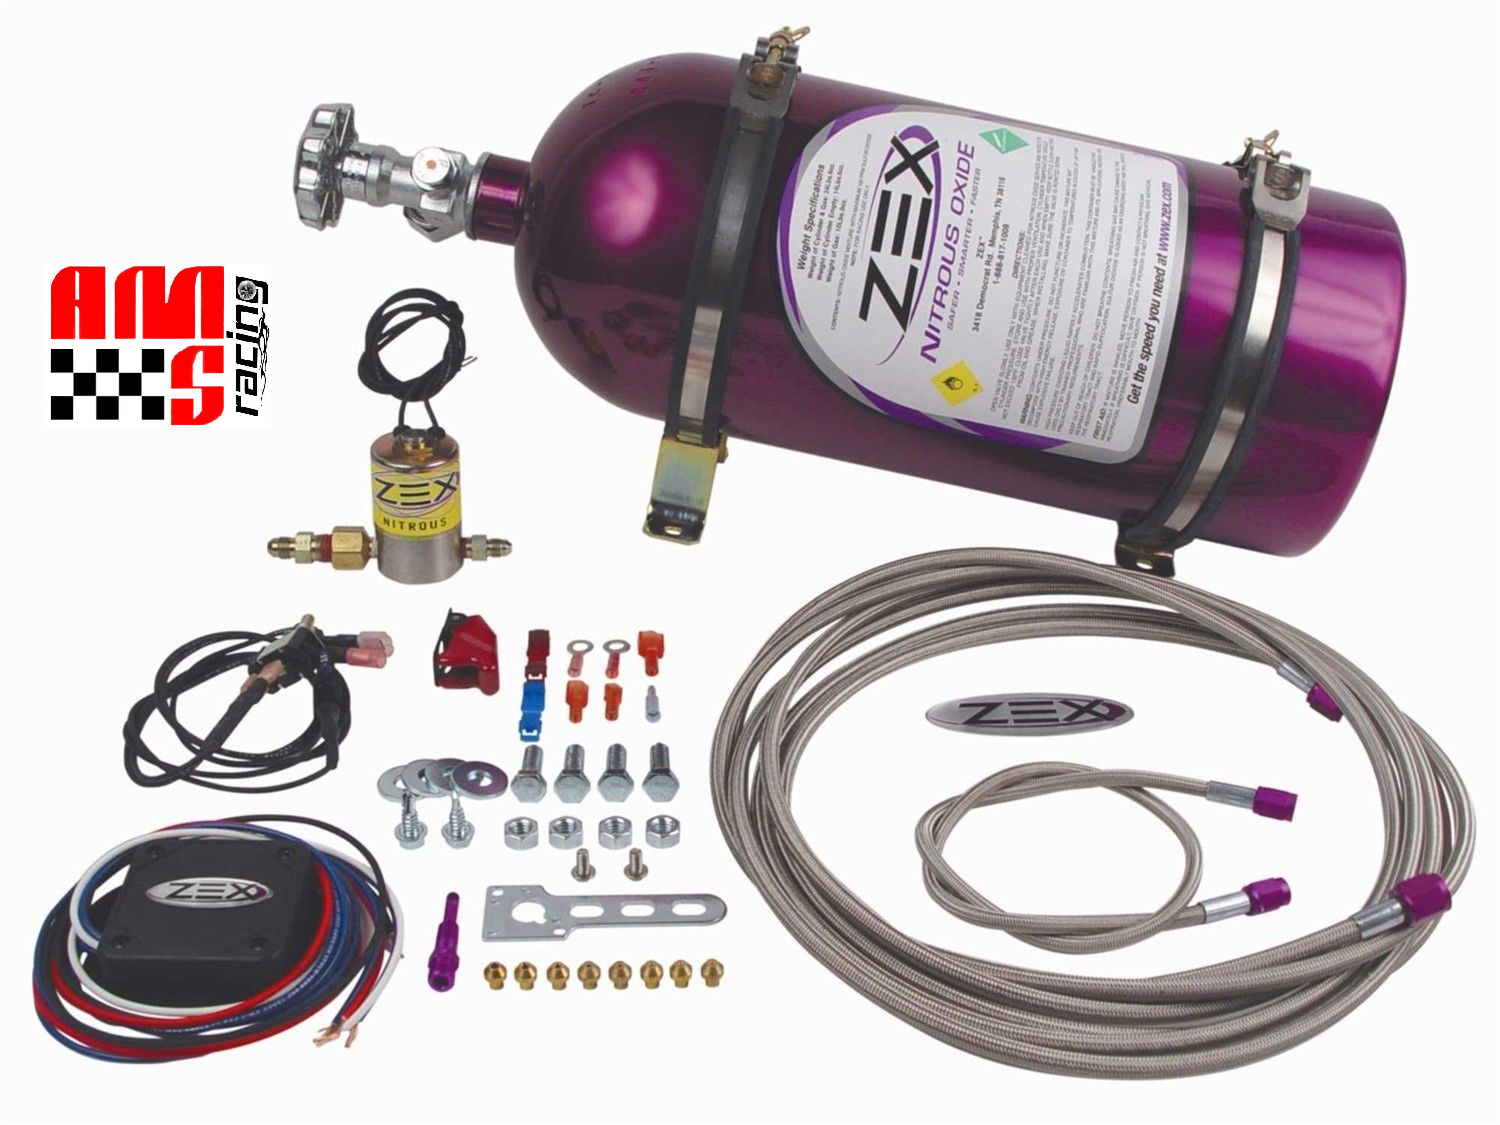 Zex 82028 35-200 HP Nitrous Oxide Kit for Universal EFI Diesel Engines